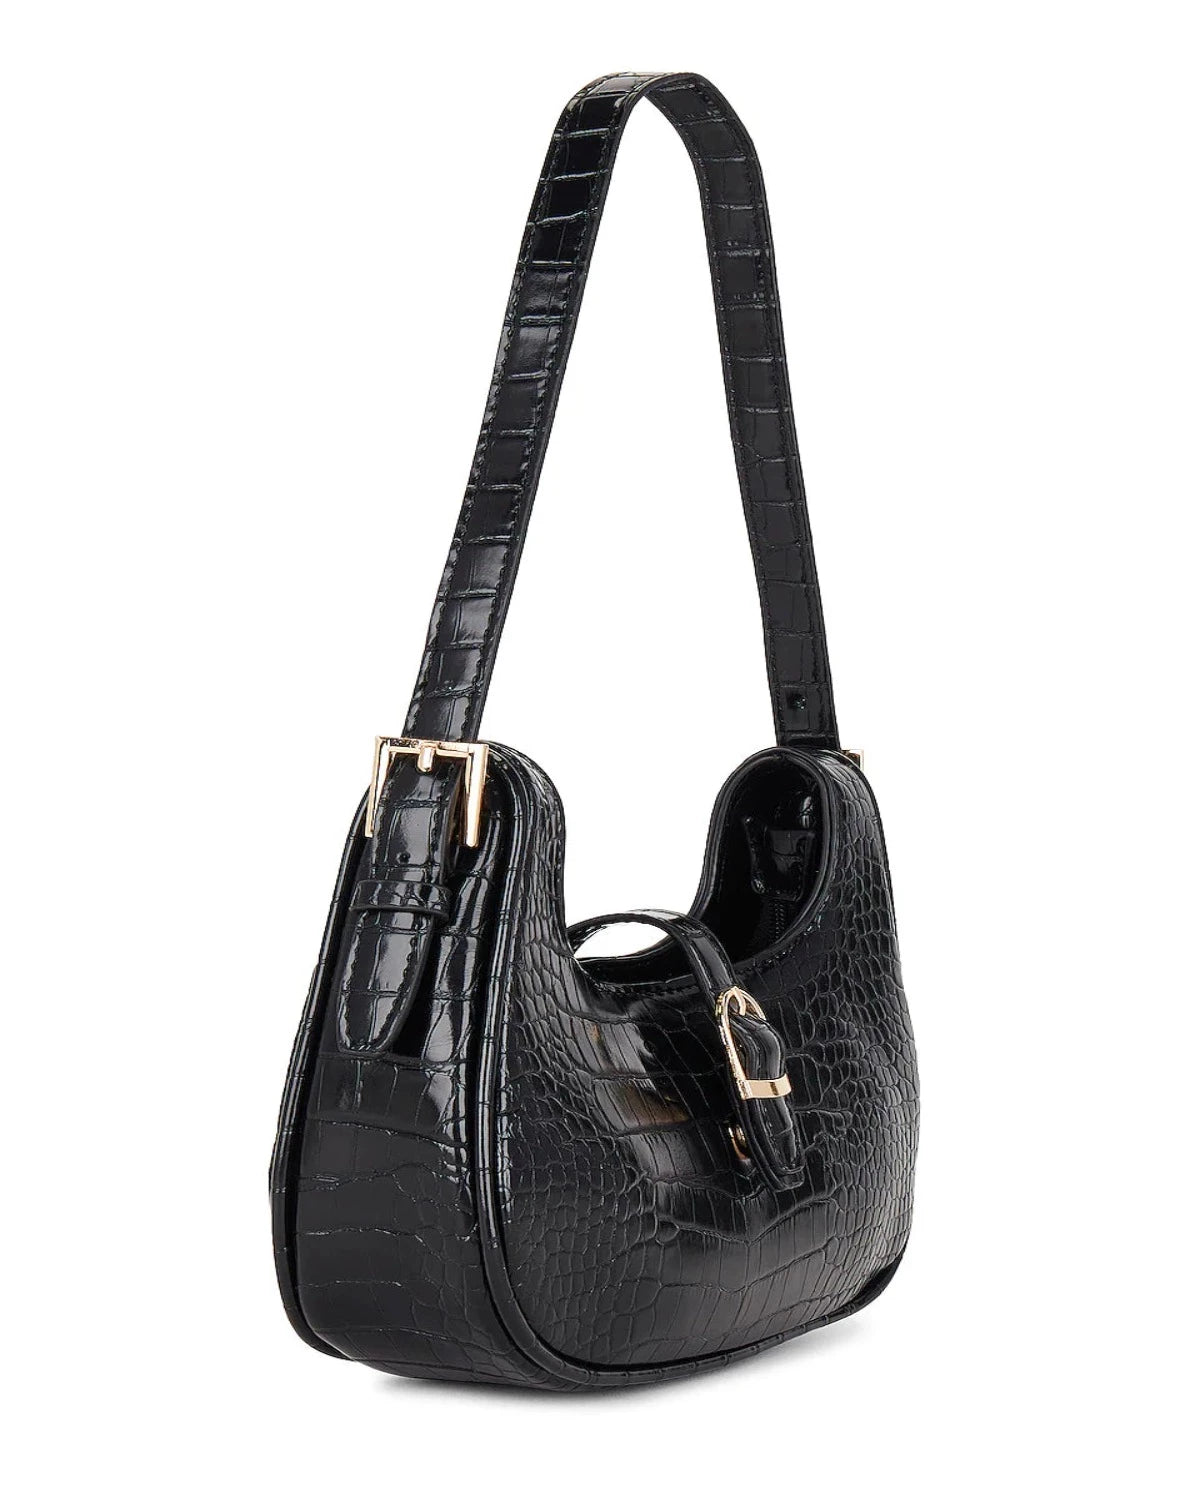 Matte Croro Speedy Ladies Hand Bag for Women/Girls